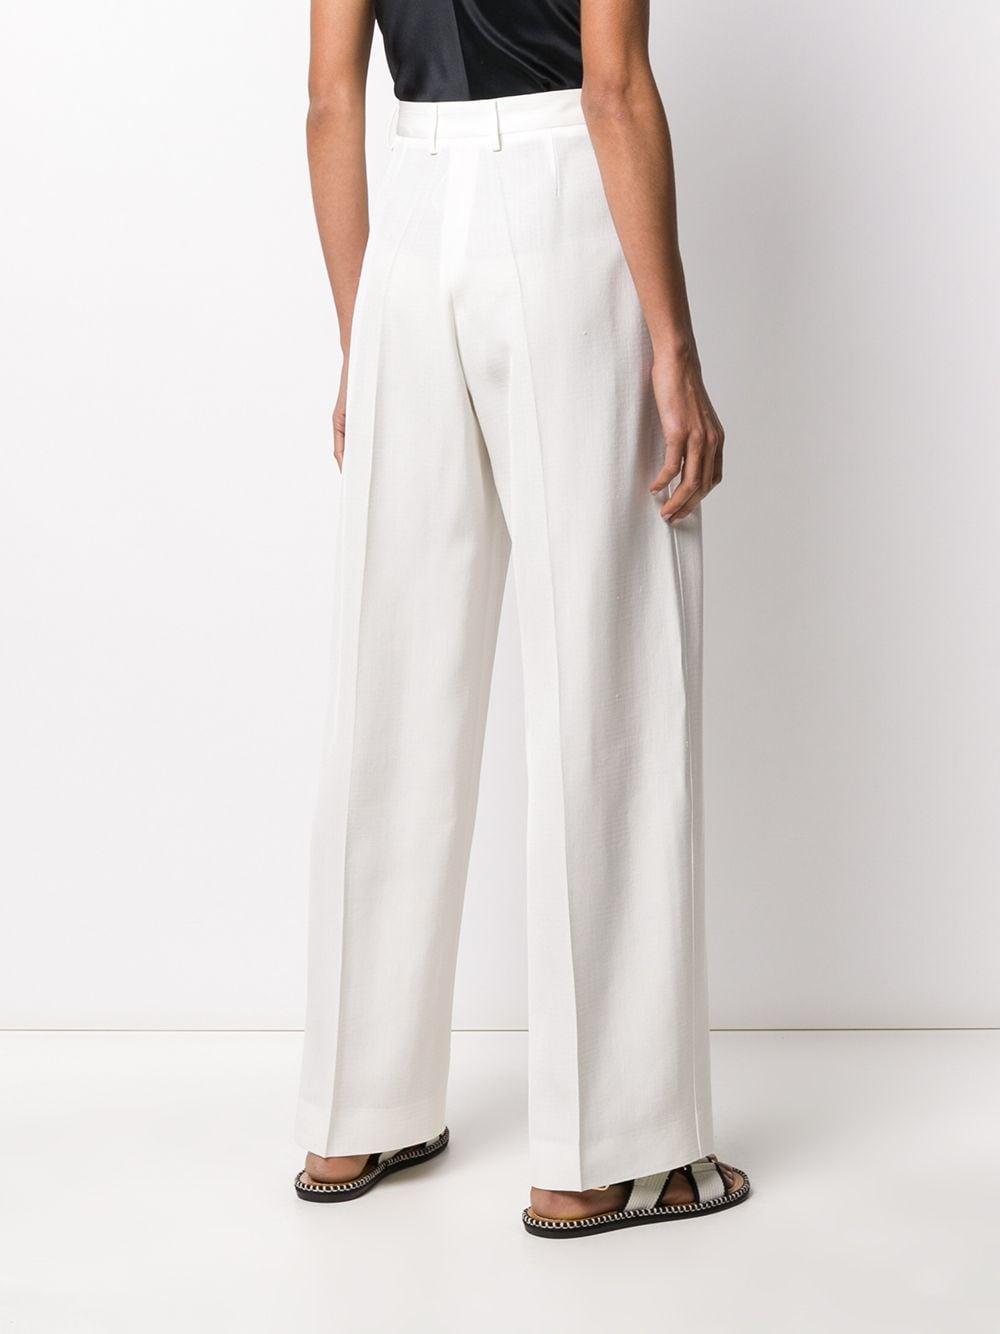 Jil Sander Silk High-rise Trousers in White - Lyst